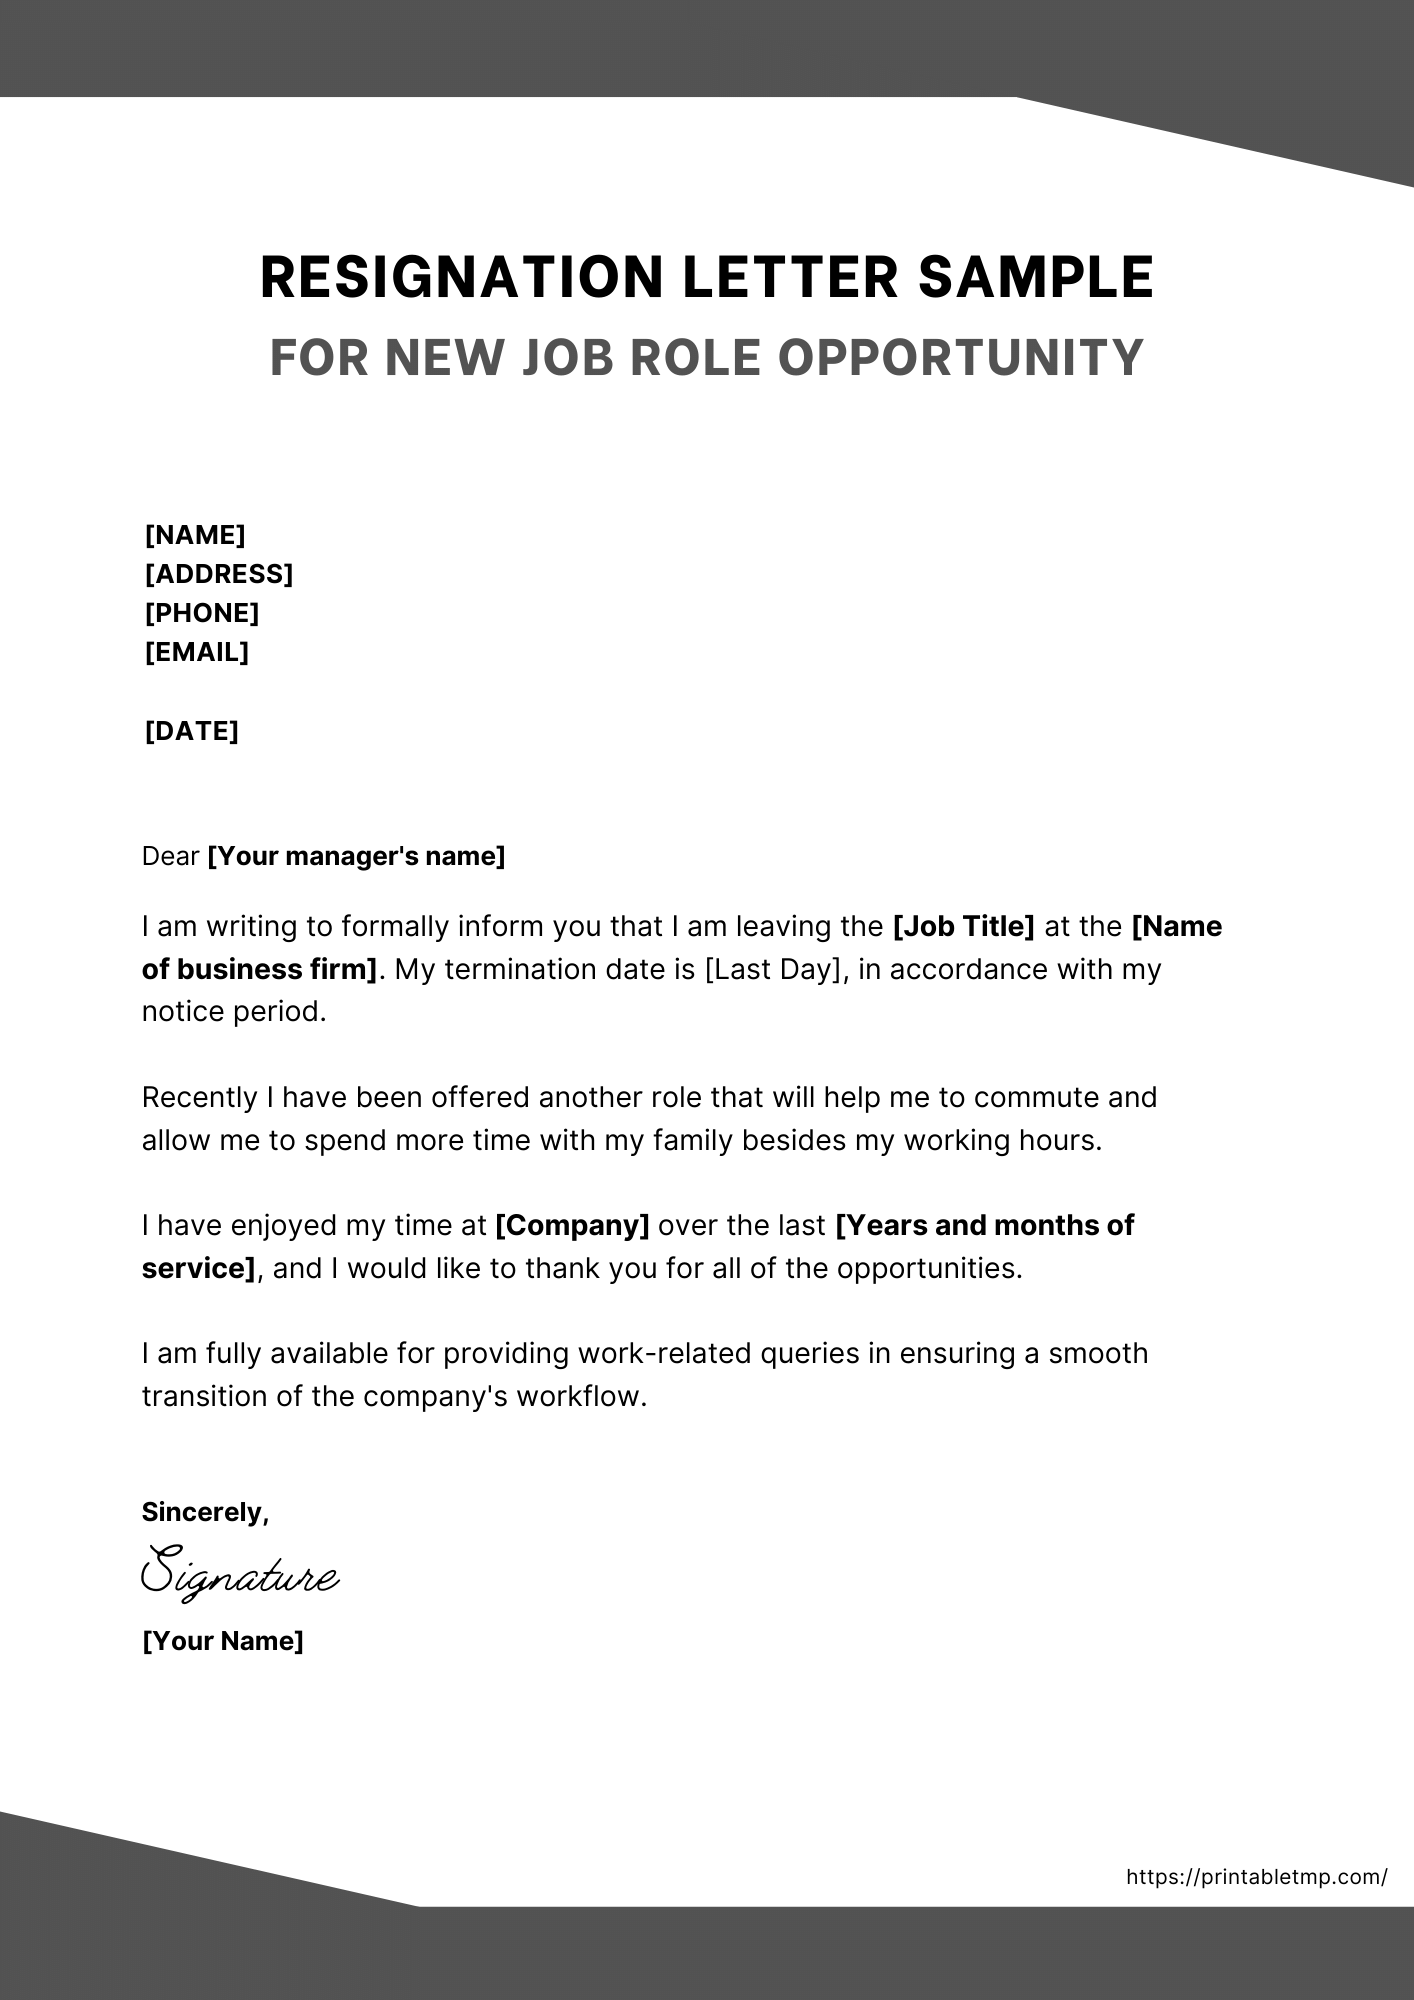 Resignation letter Sample for New Job Role Opportunity